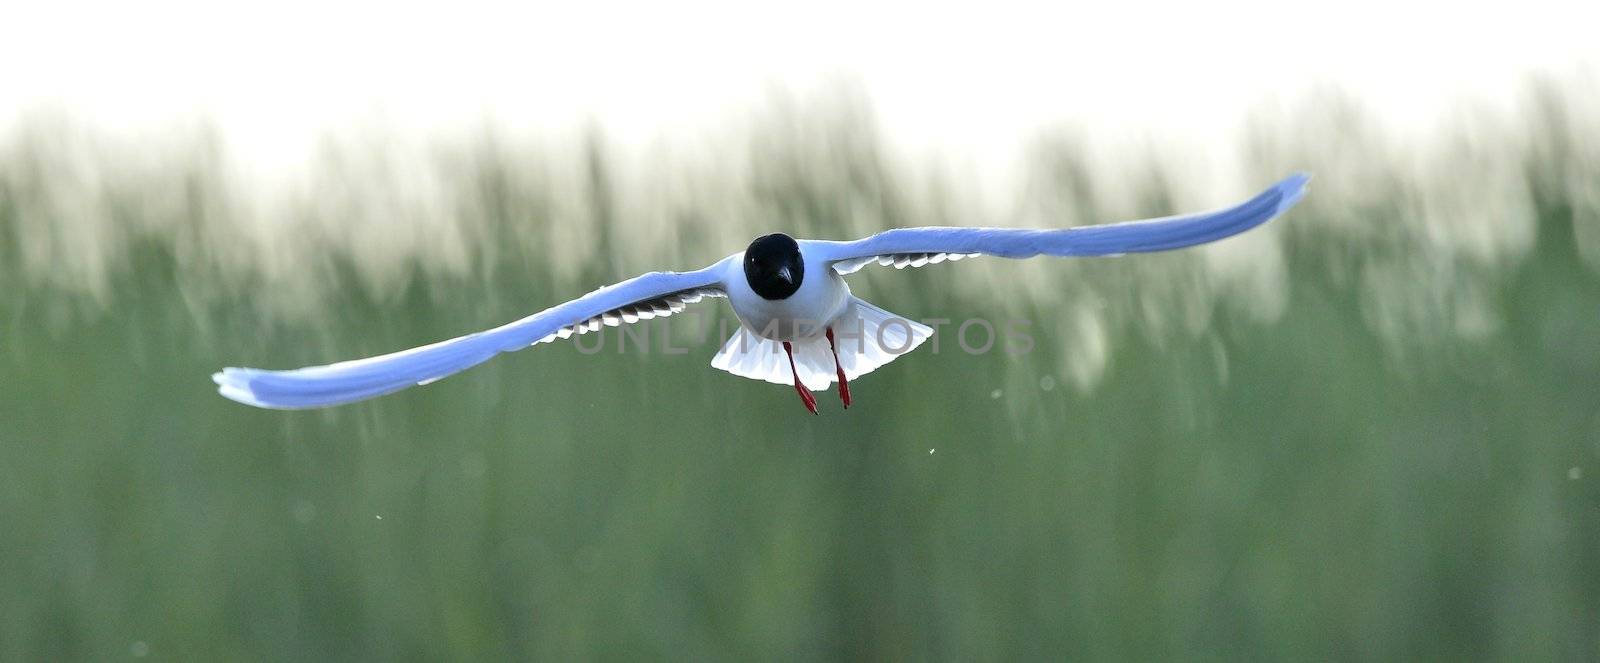 Black-headed Gull (Larus ridibundus) in flight on the green grass background. Front. Bakclight